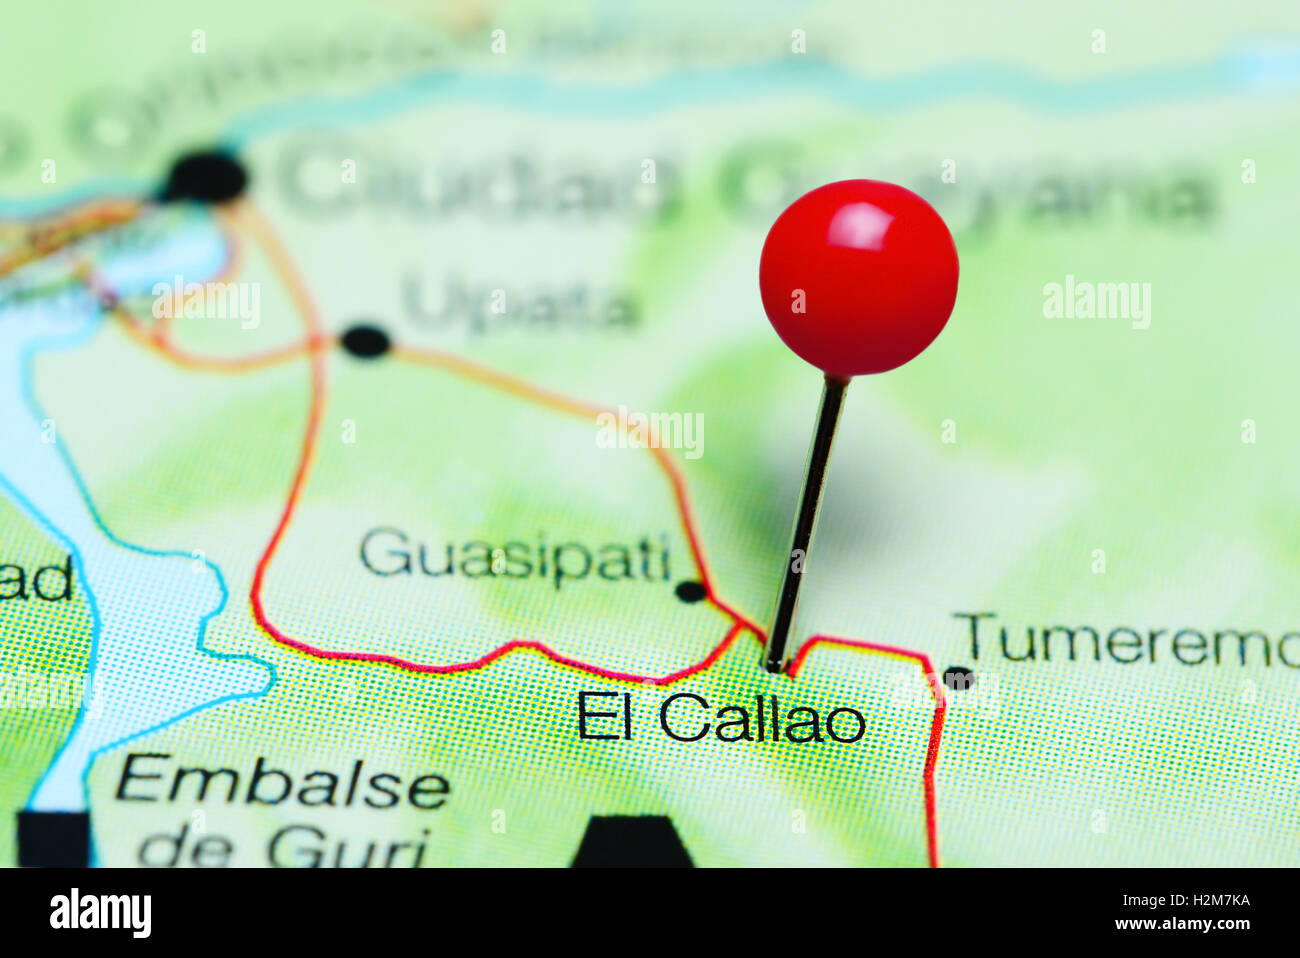 El Callao pinned on a map of Venezuela Stock Photo